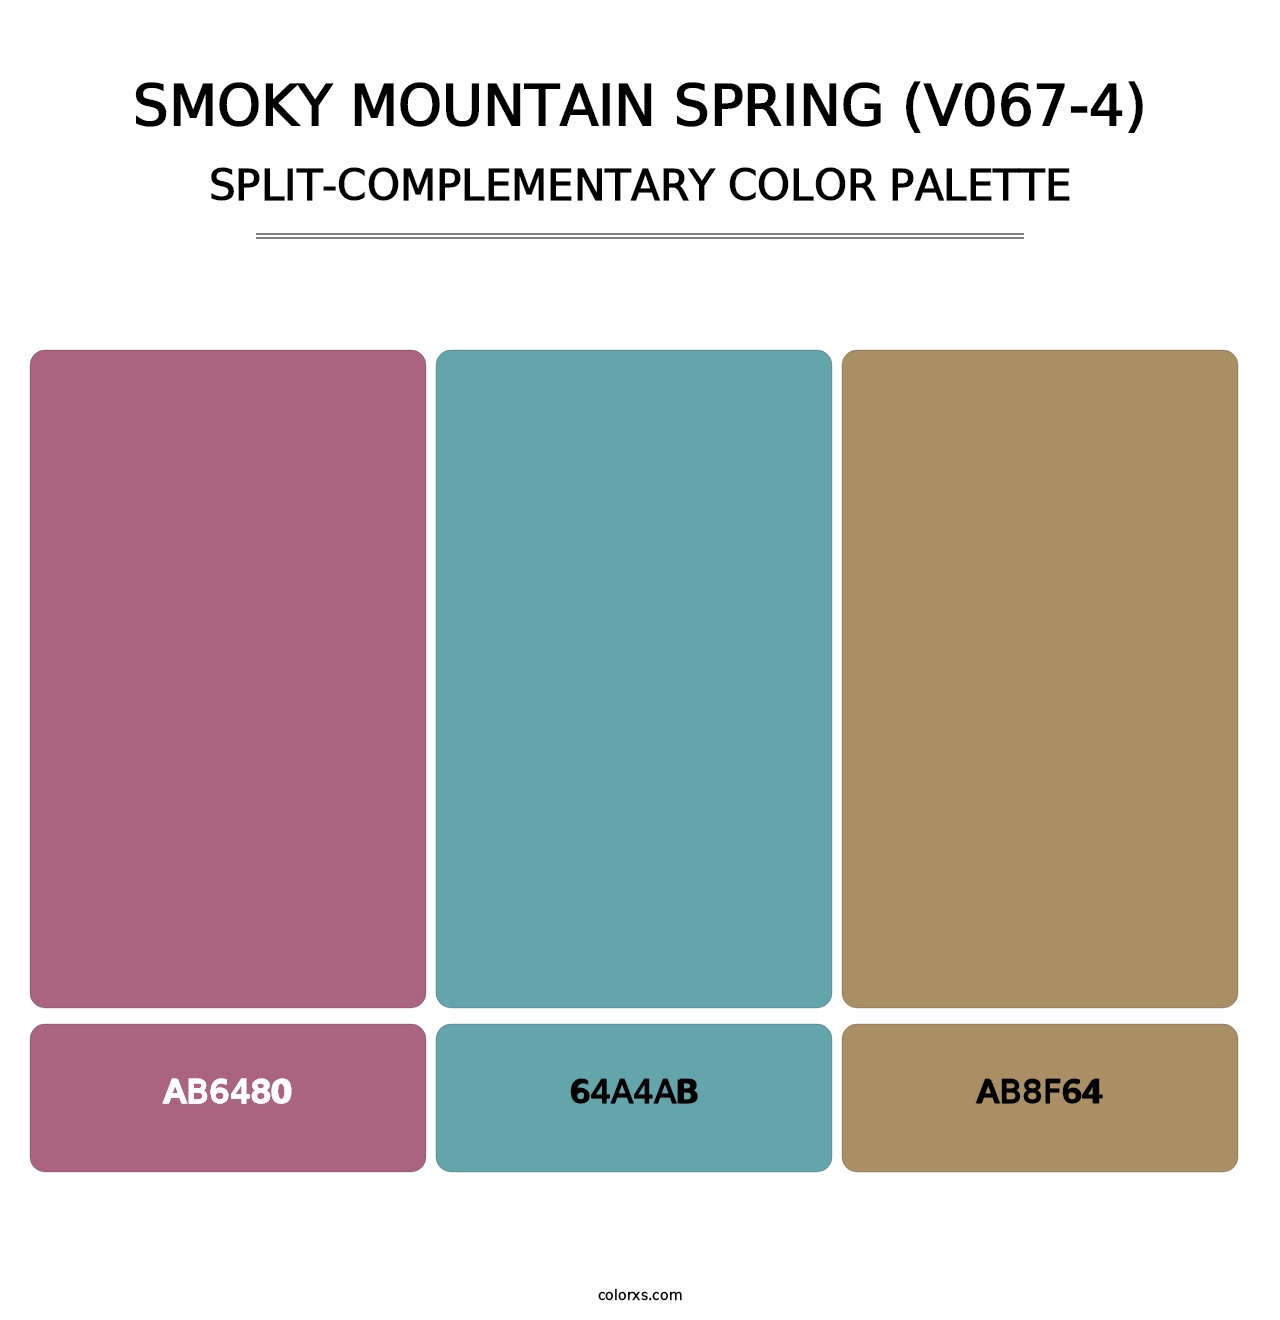 Smoky Mountain Spring (V067-4) - Split-Complementary Color Palette